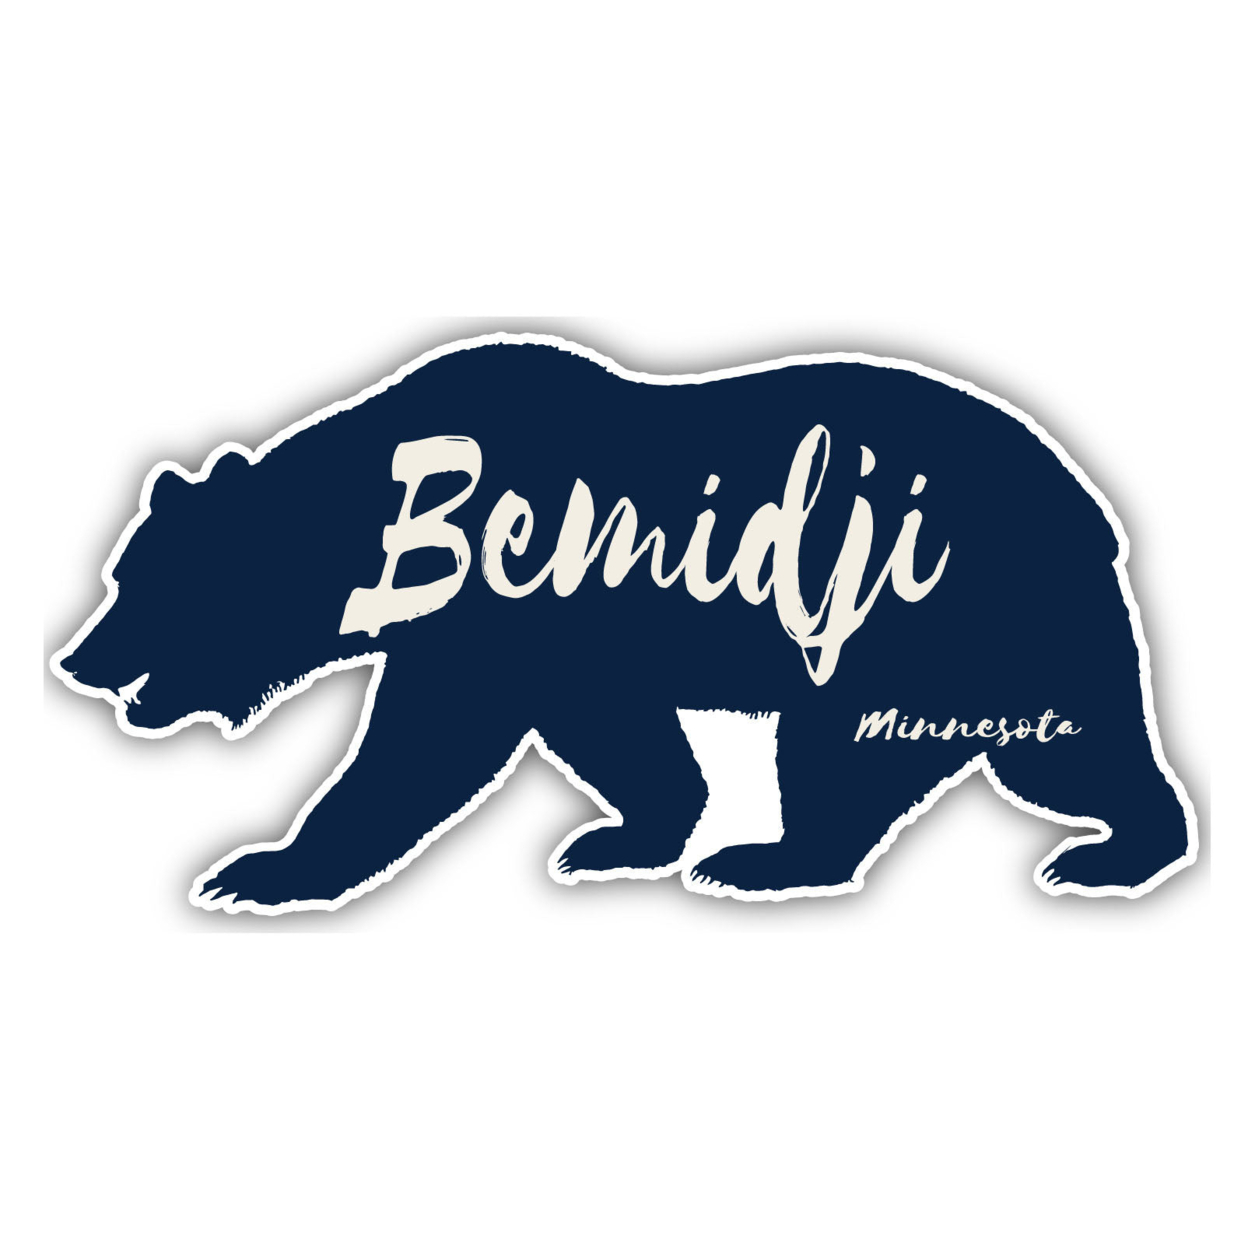 Bemidji Minnesota Souvenir Decorative Stickers (Choose Theme And Size) - Single Unit, 2-Inch, Tent